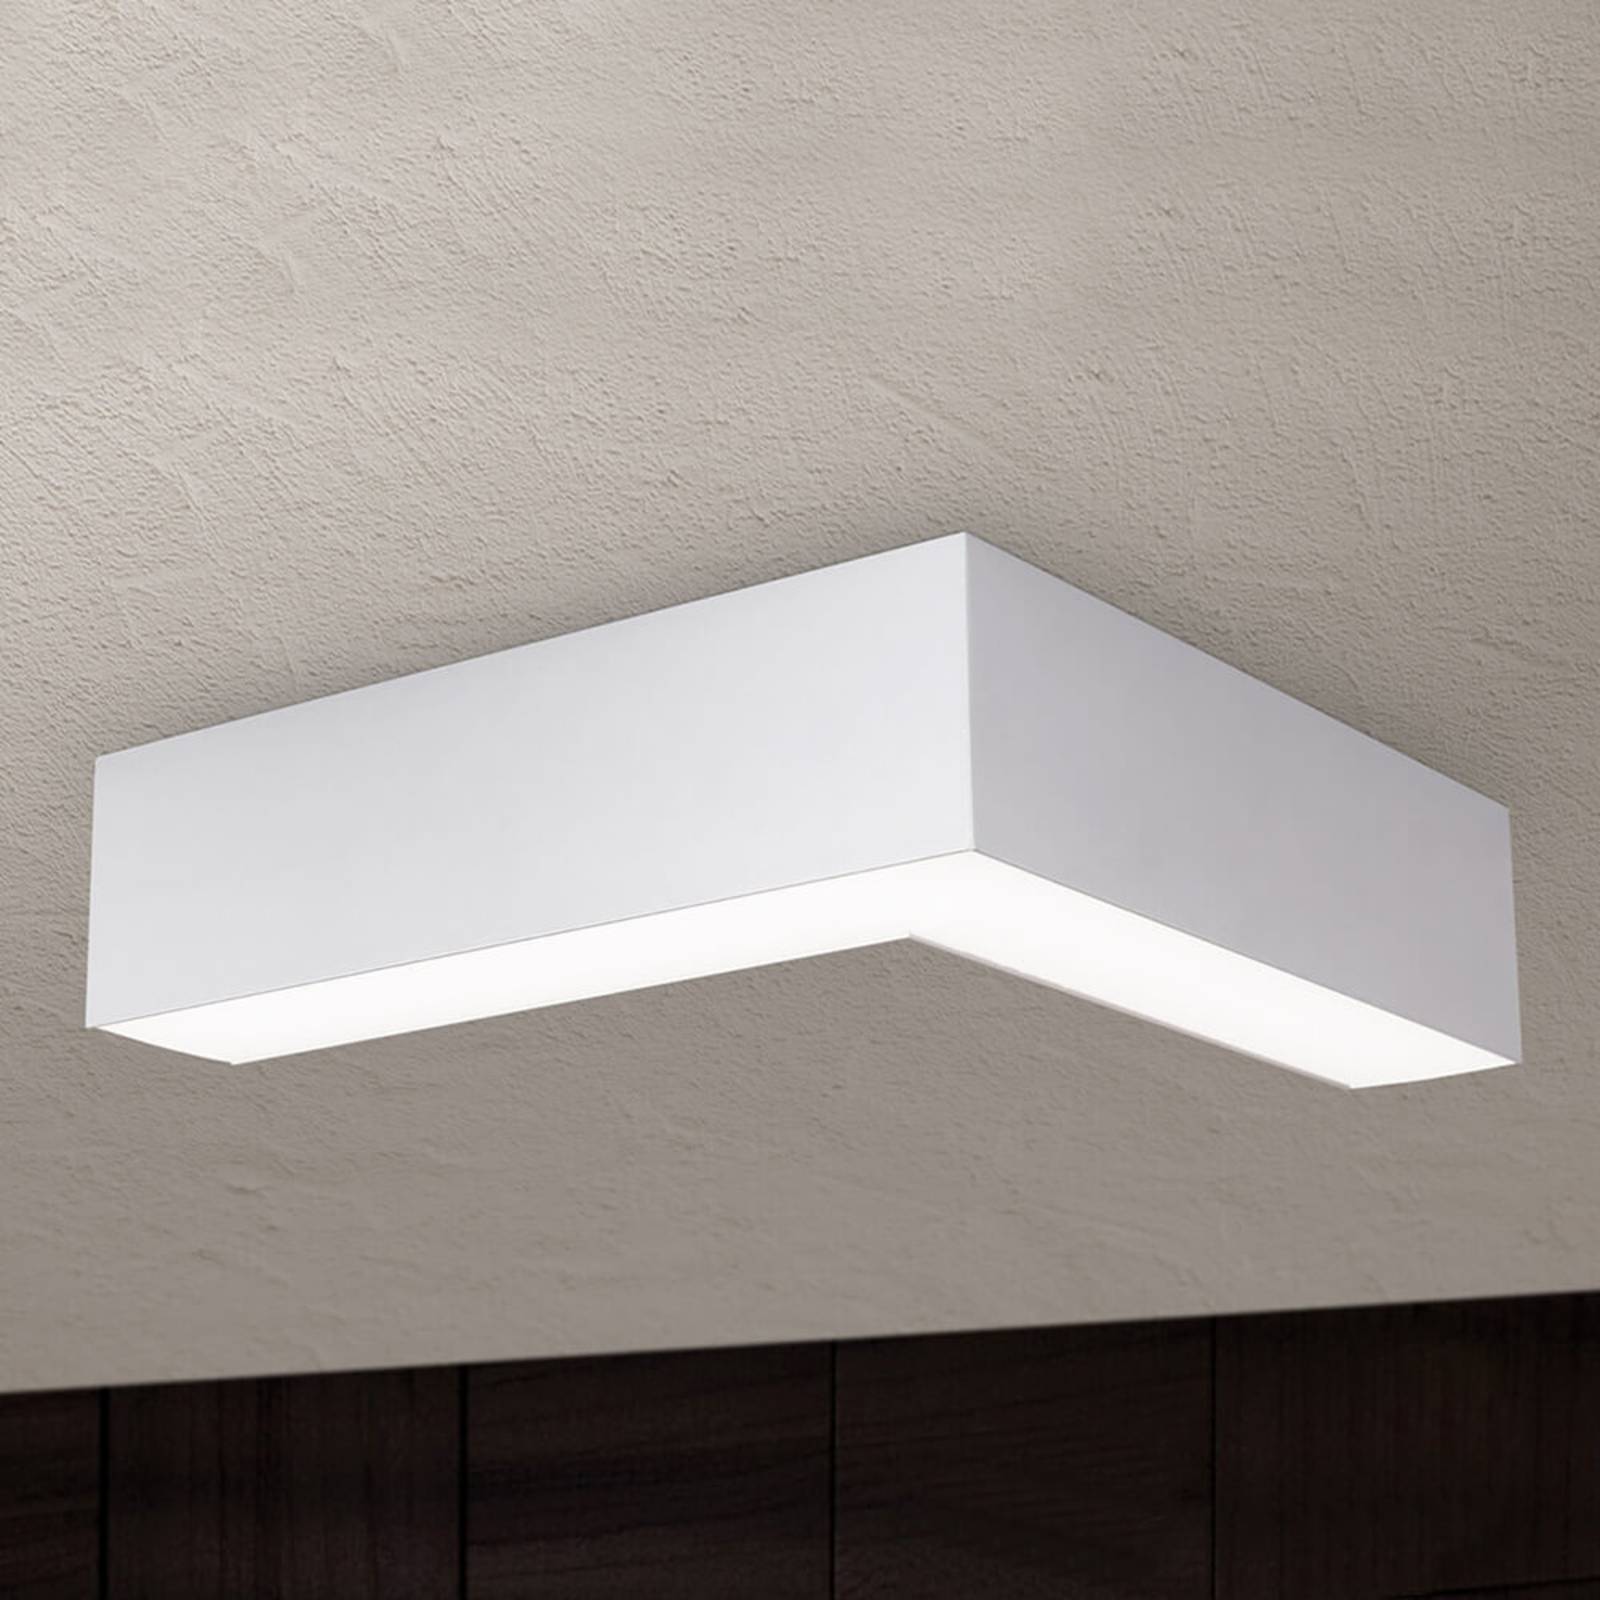 Lampa sufitowa LED Sando, zestaw, 30x30 cm